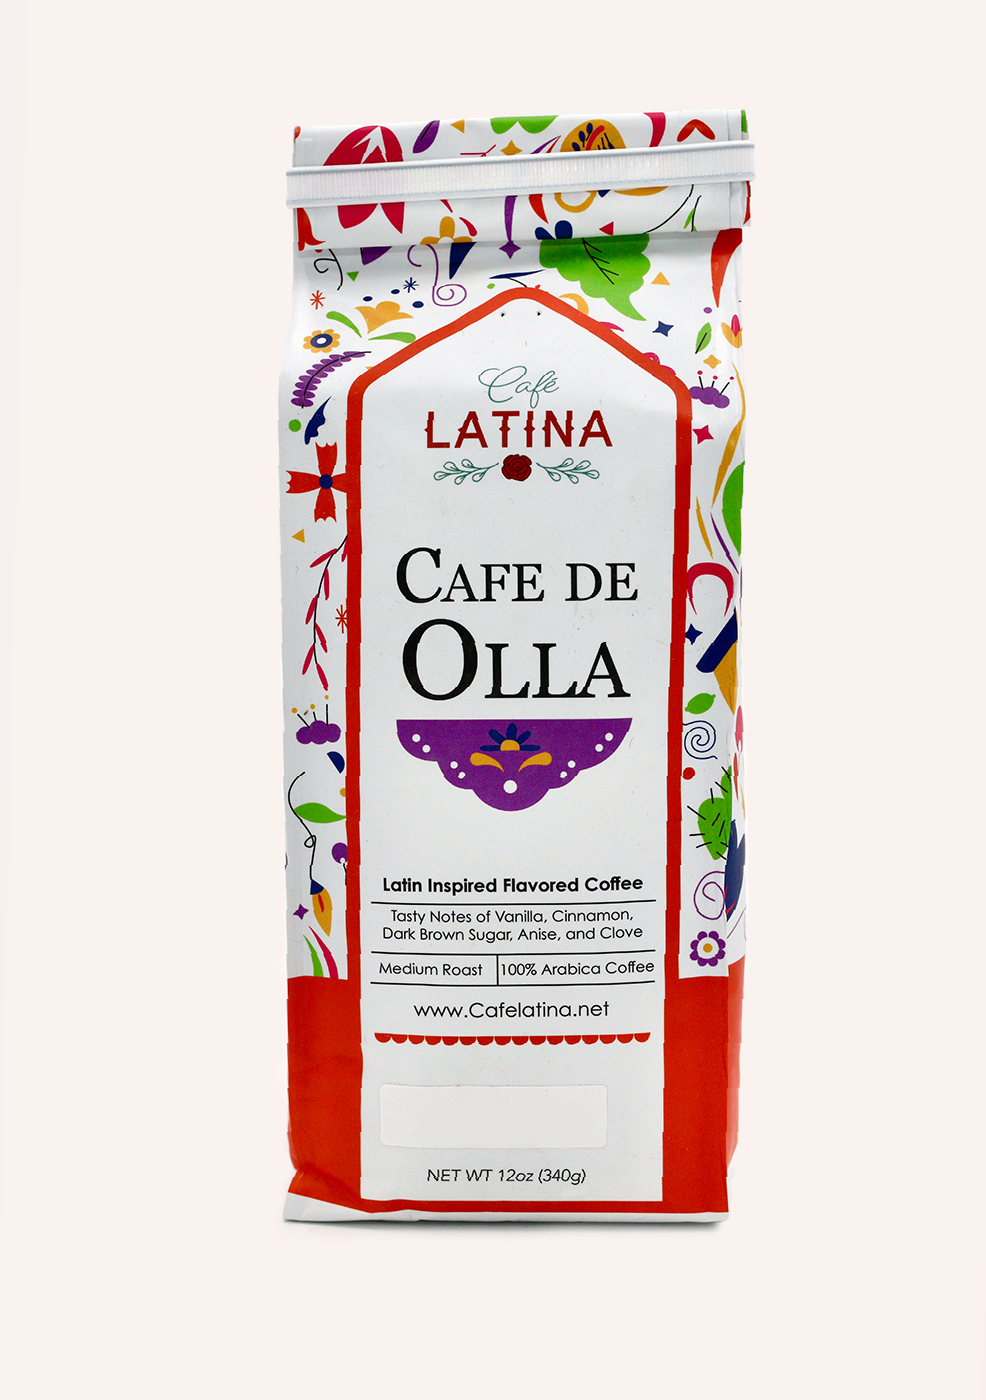 Cafe de Olla - Cafe Latina